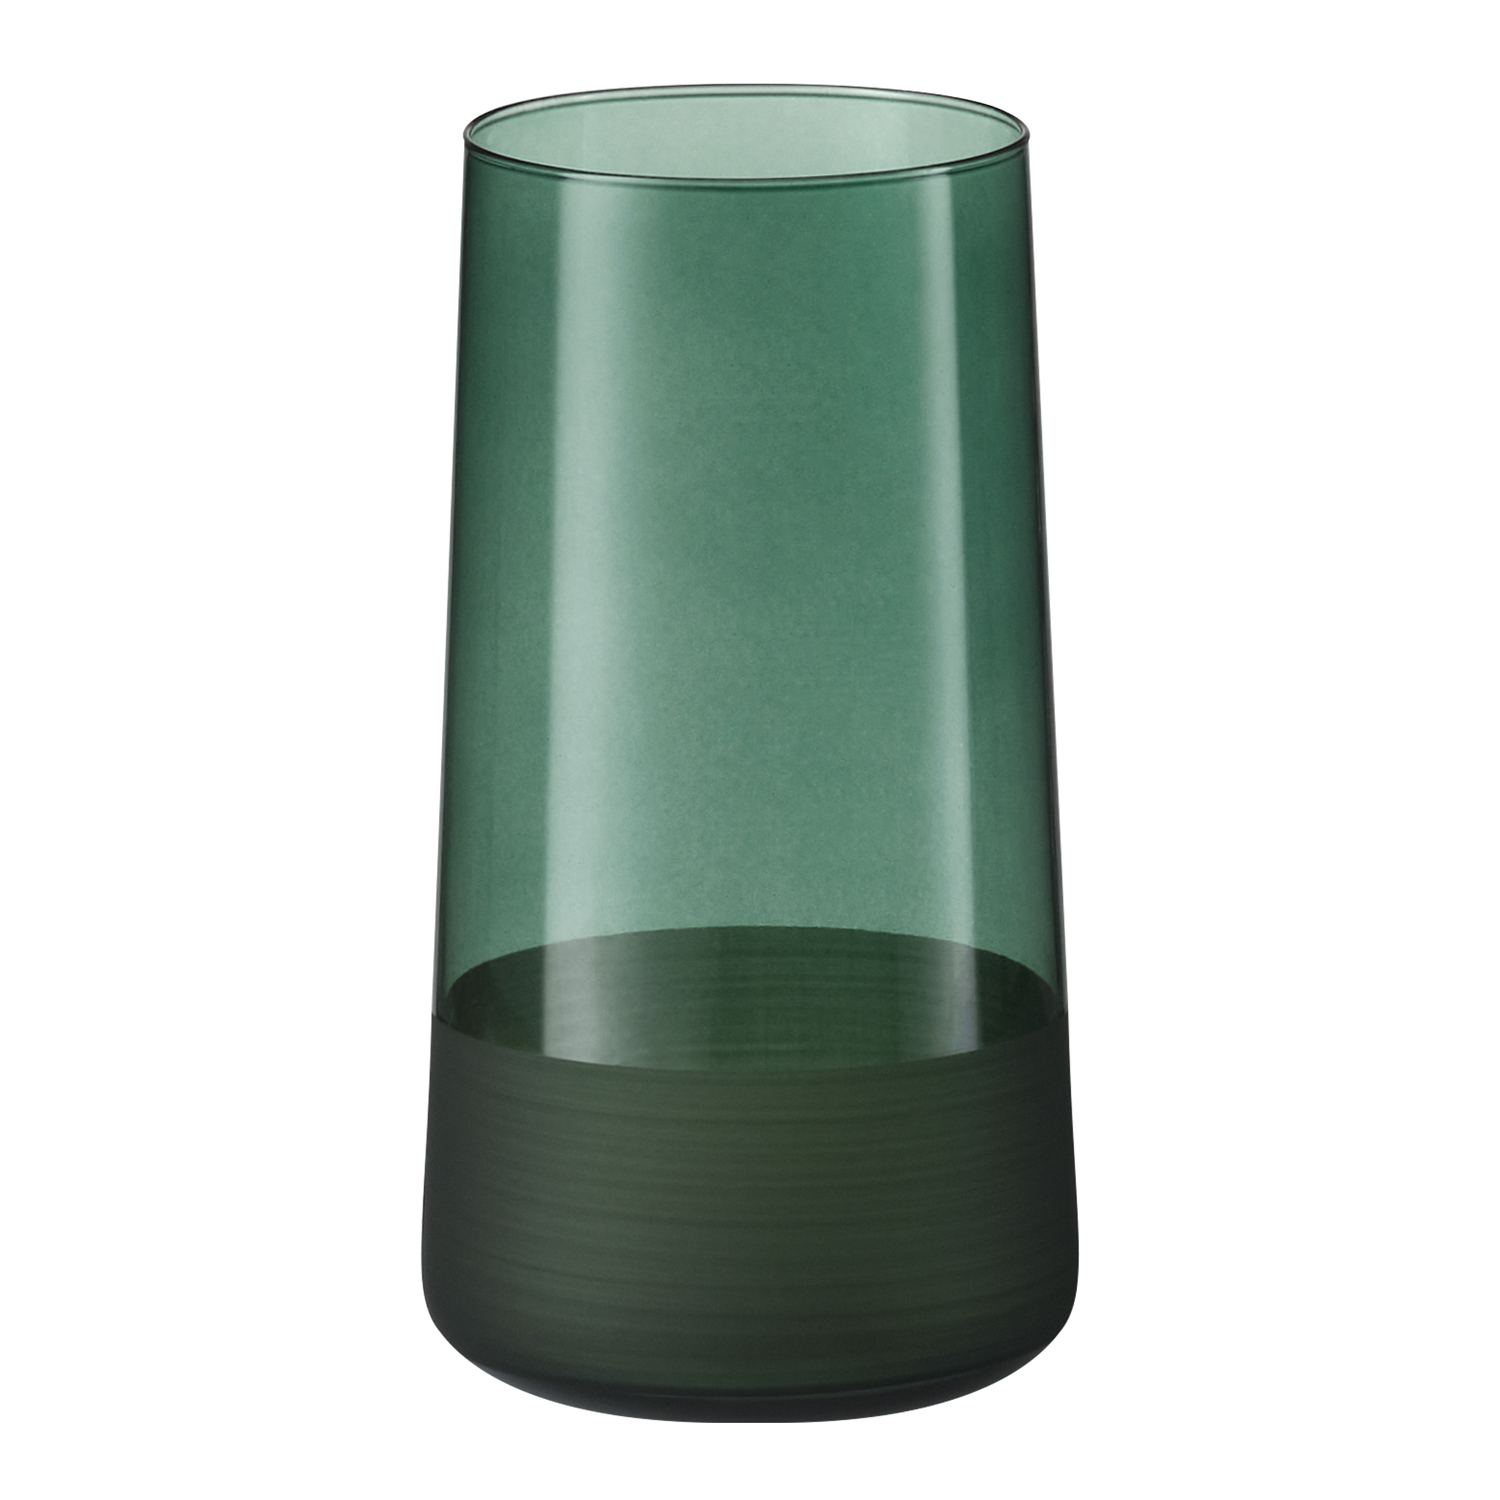 Артикул: A73077.040 — Стакан для воды высокий, Emerald, 540 ml, зеленый